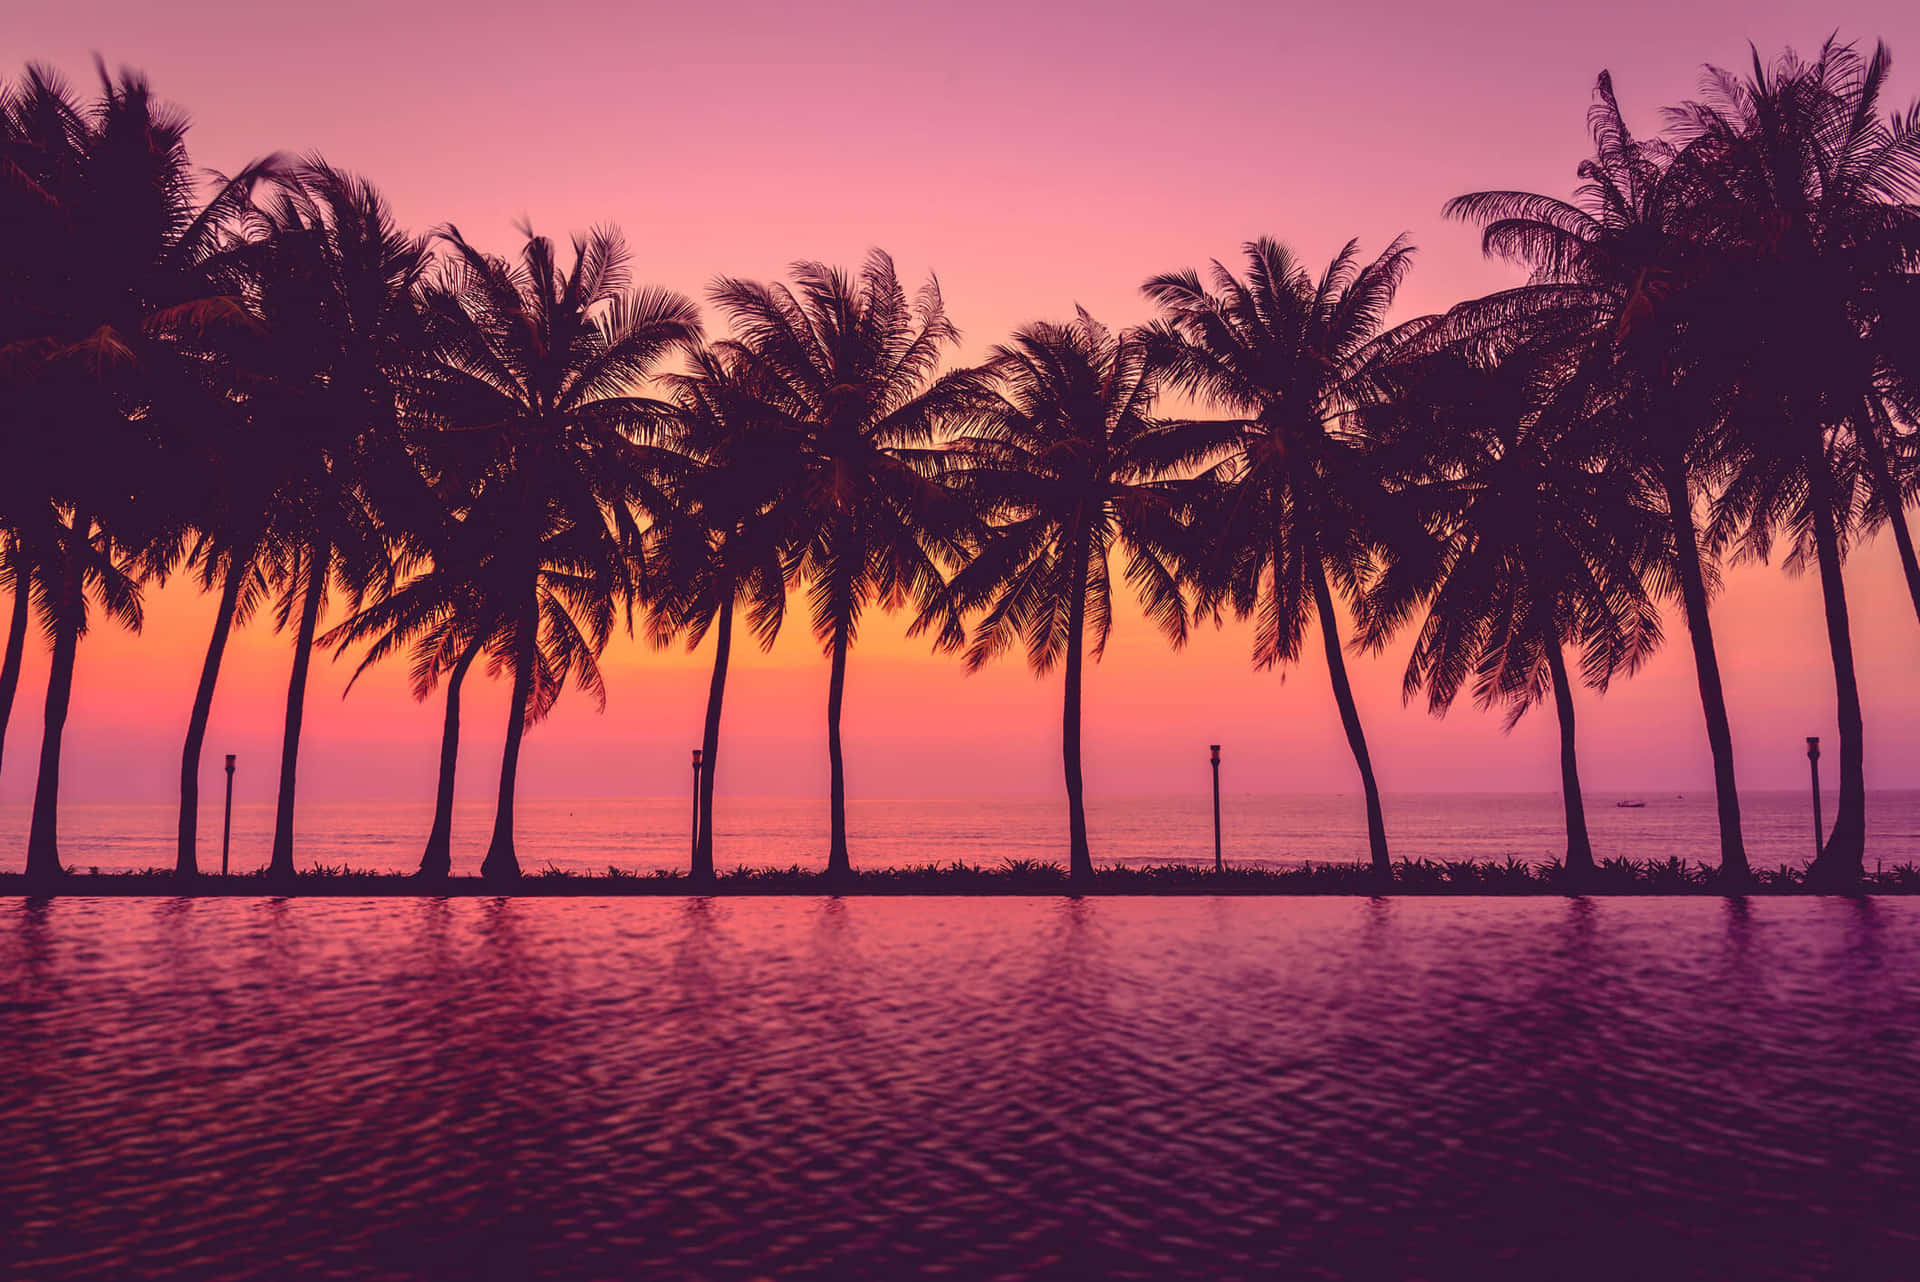 A tranquil palm tree beach